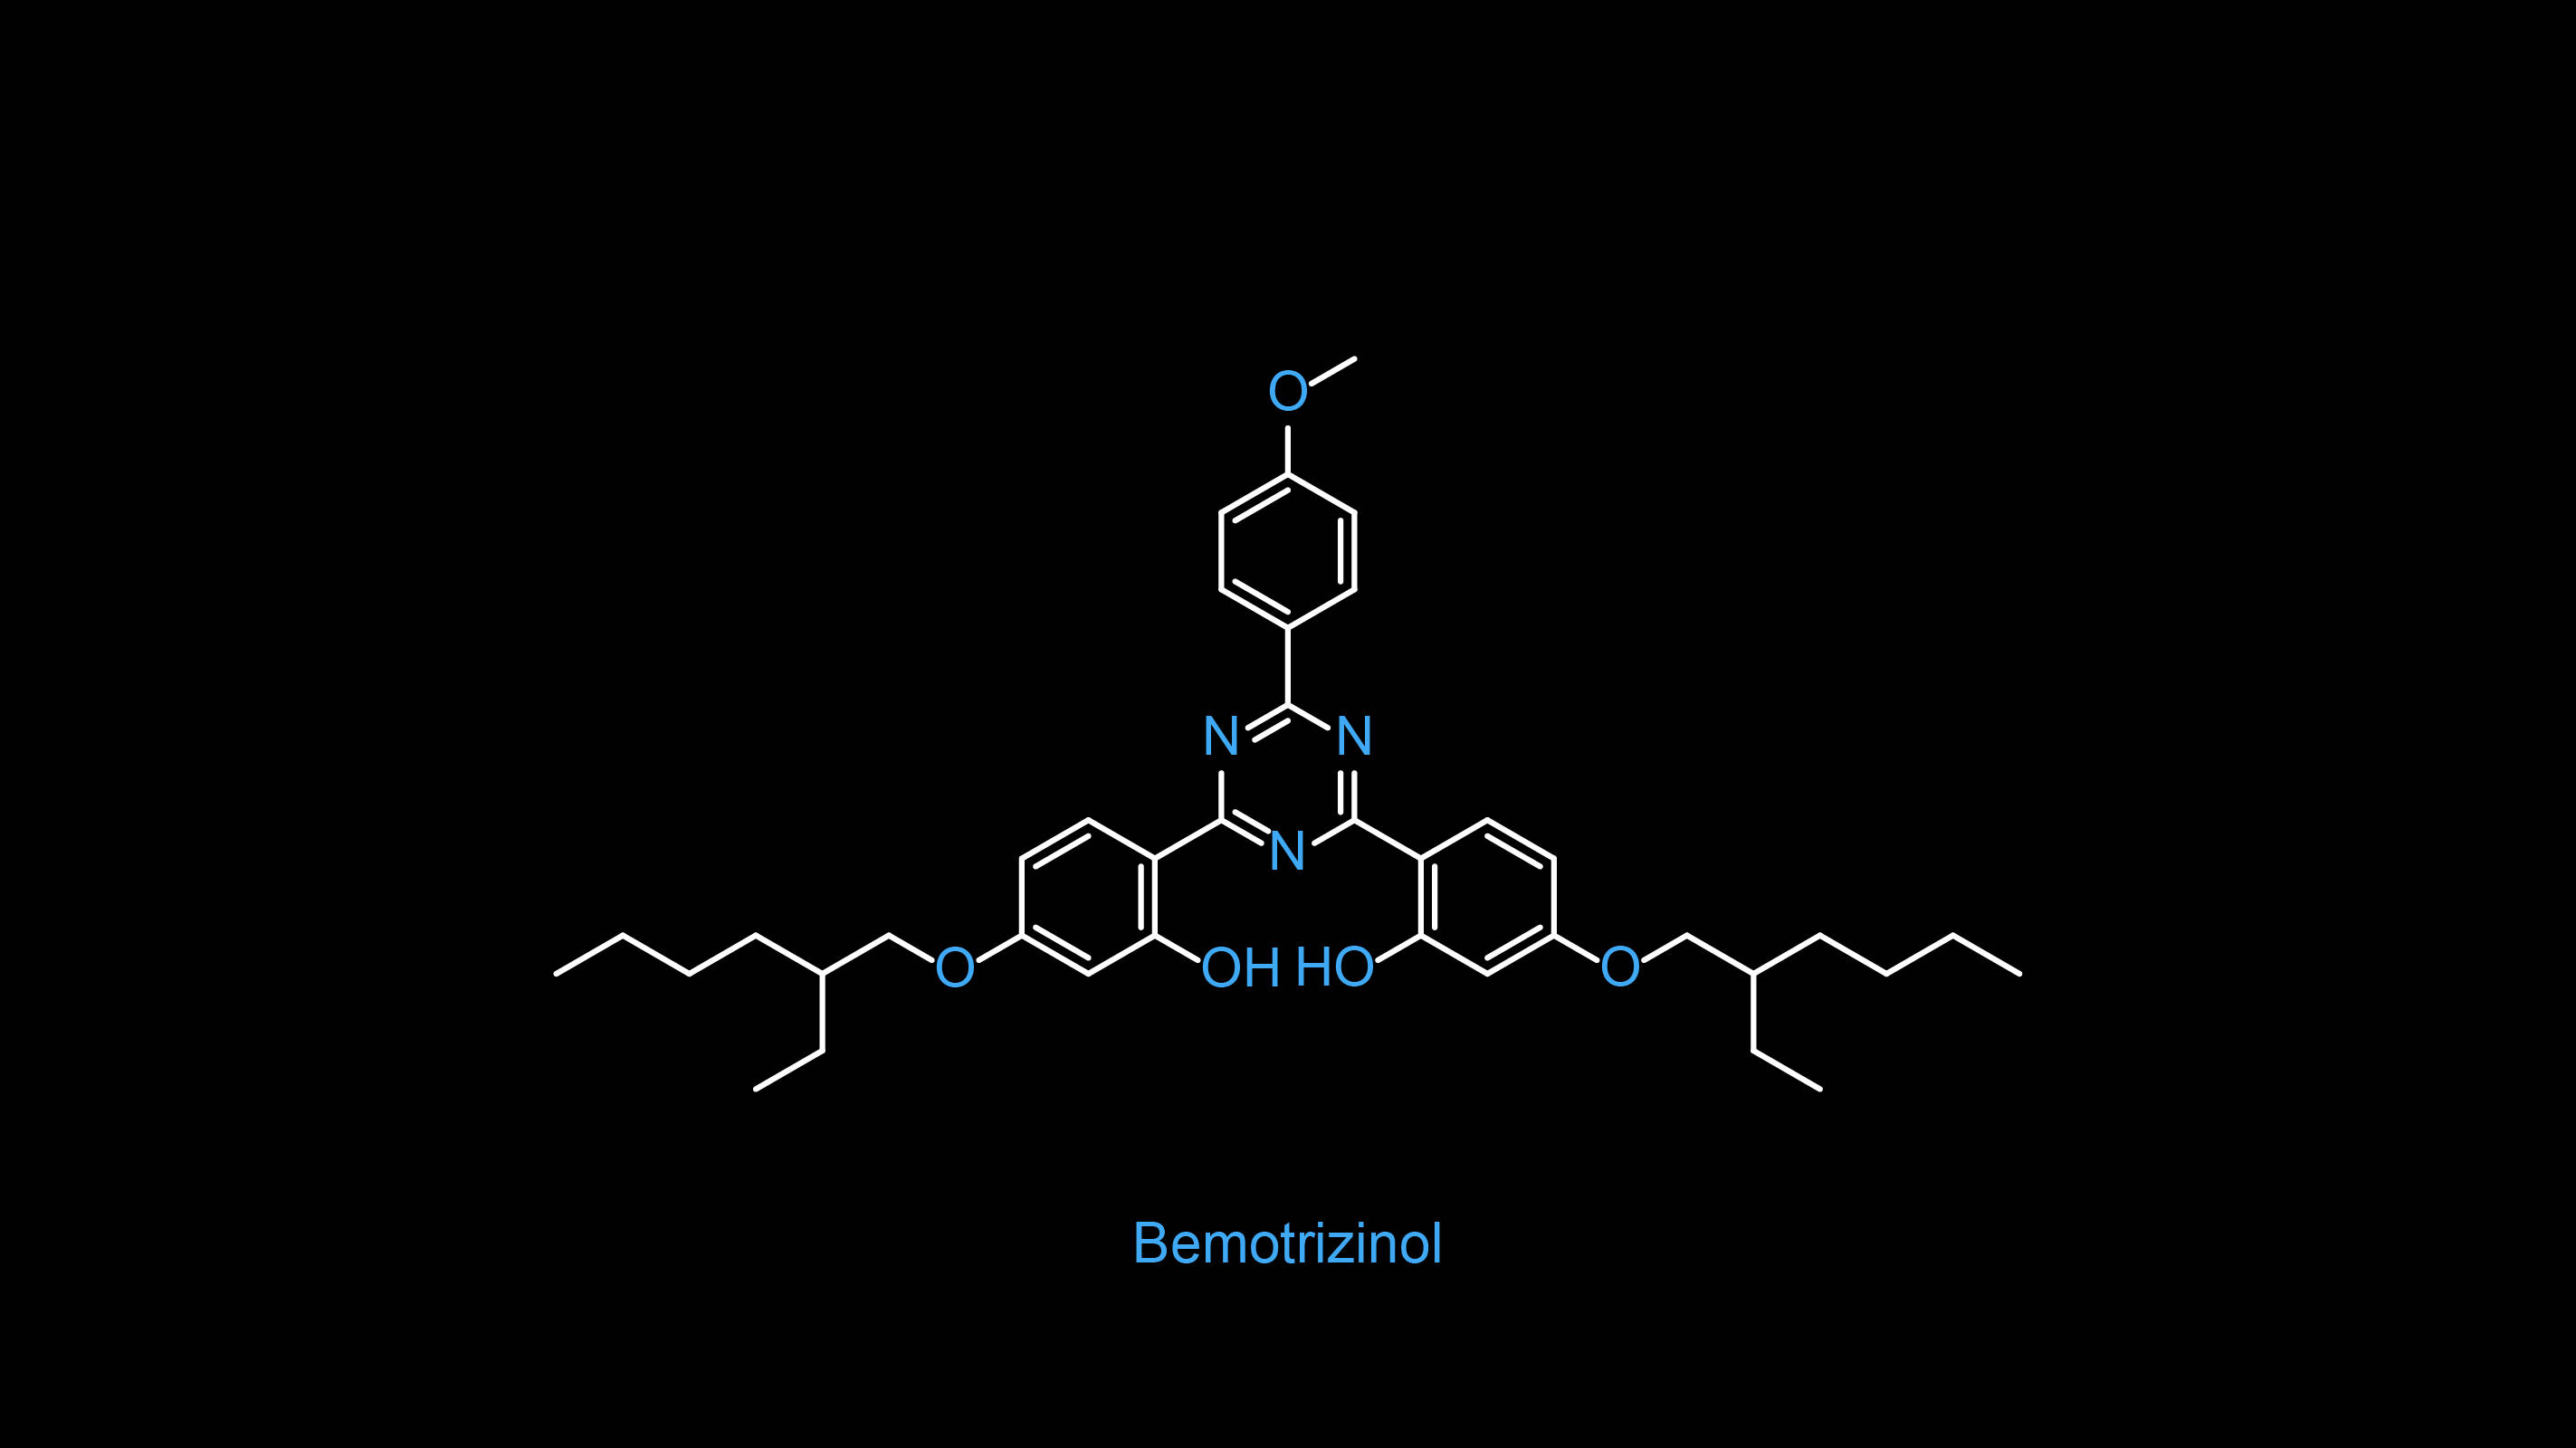 Bemotrizinol is a chemical compound. - Chemistry